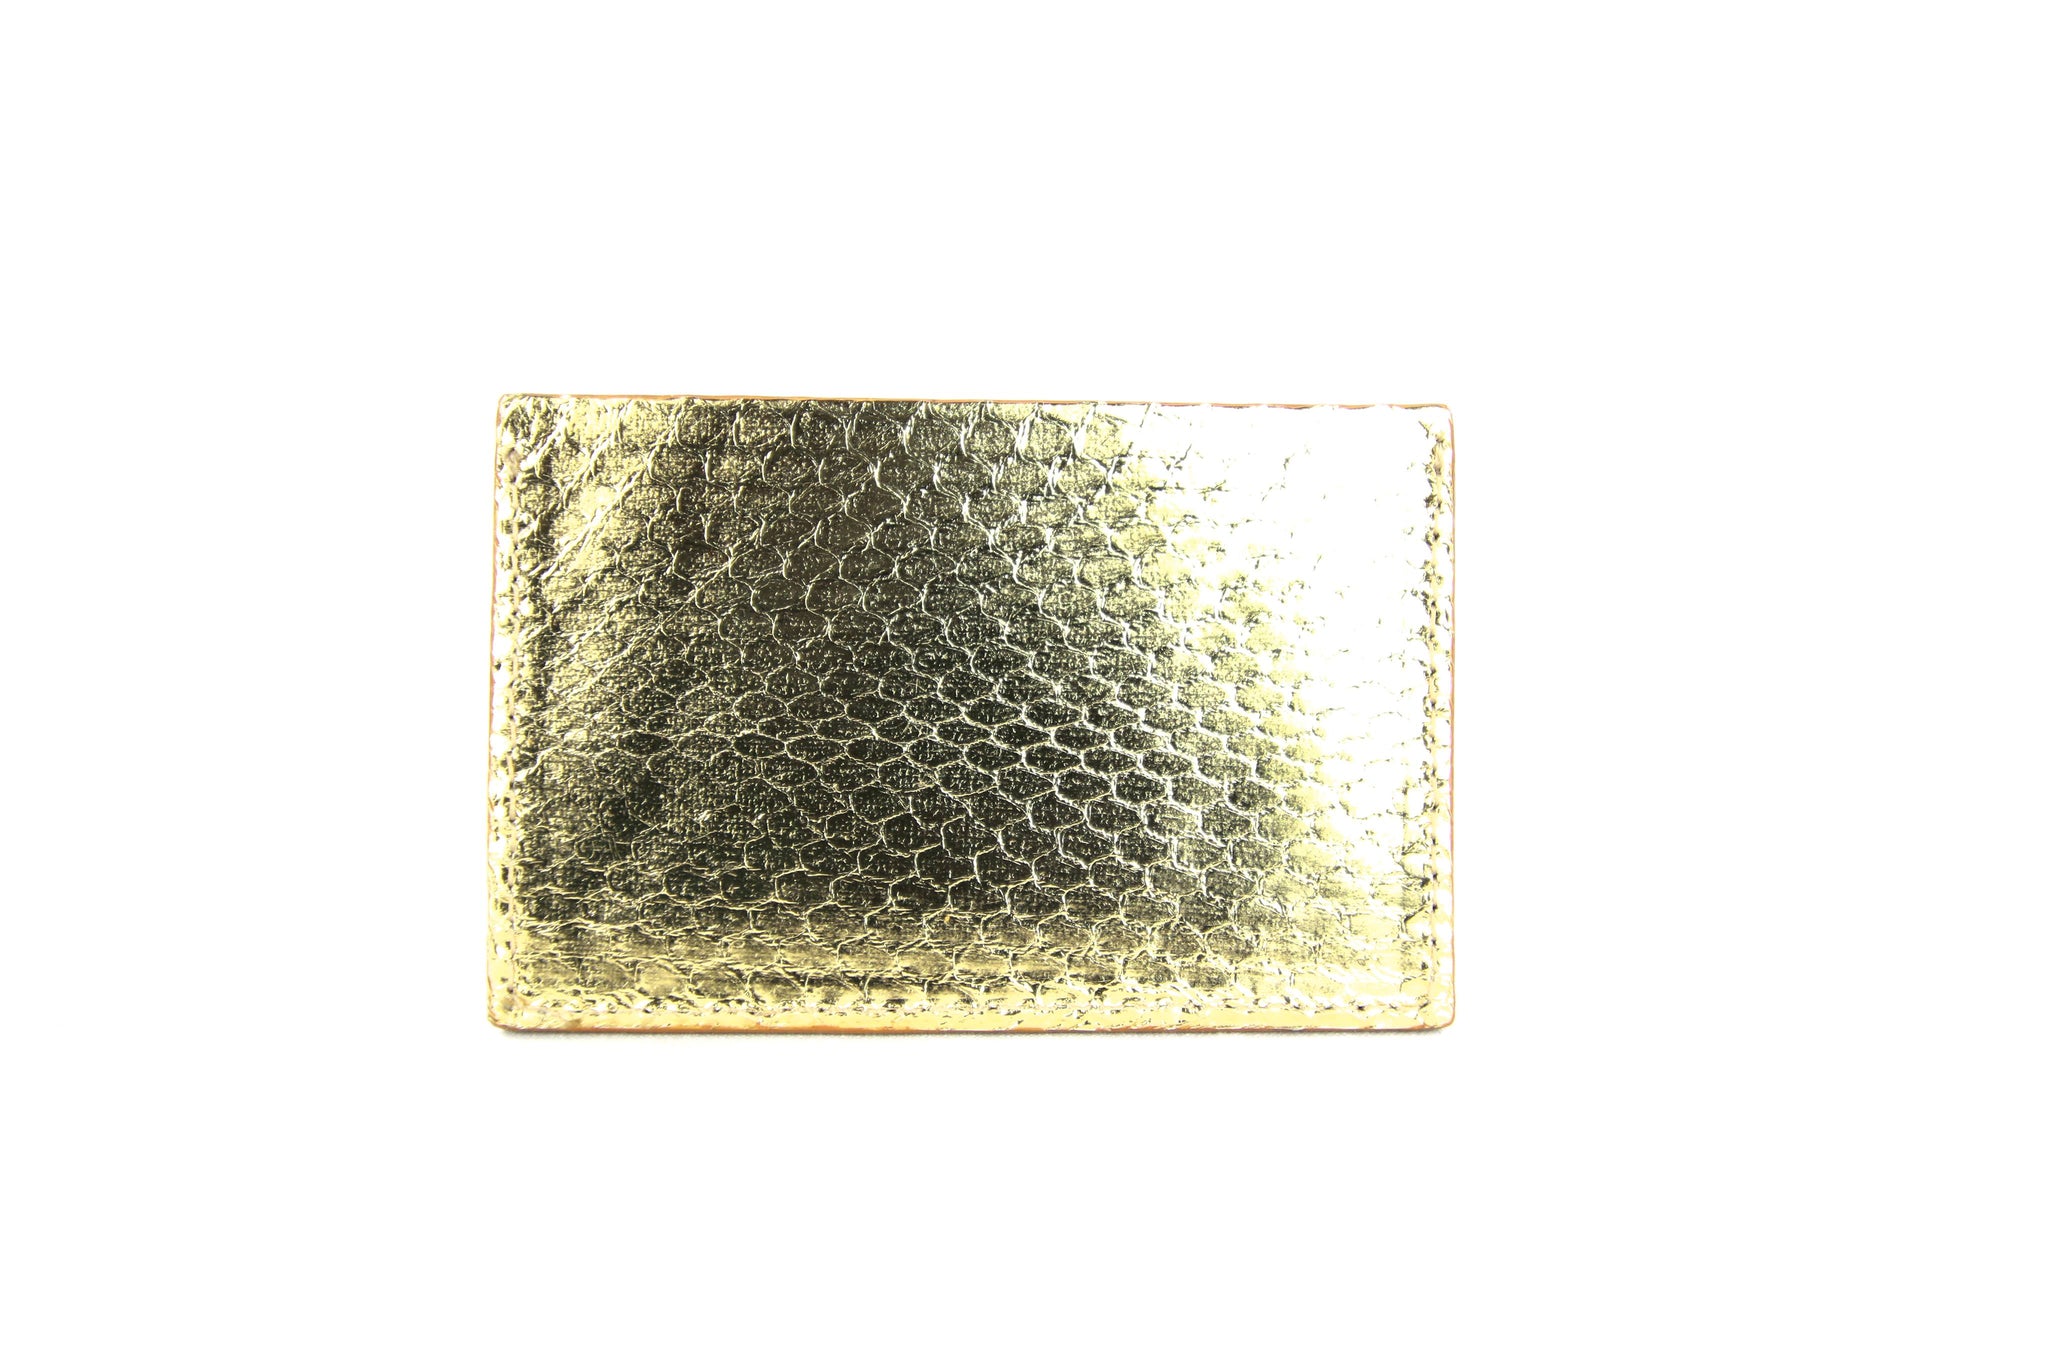 Wallet, Gold Viper Snake, Italian leather